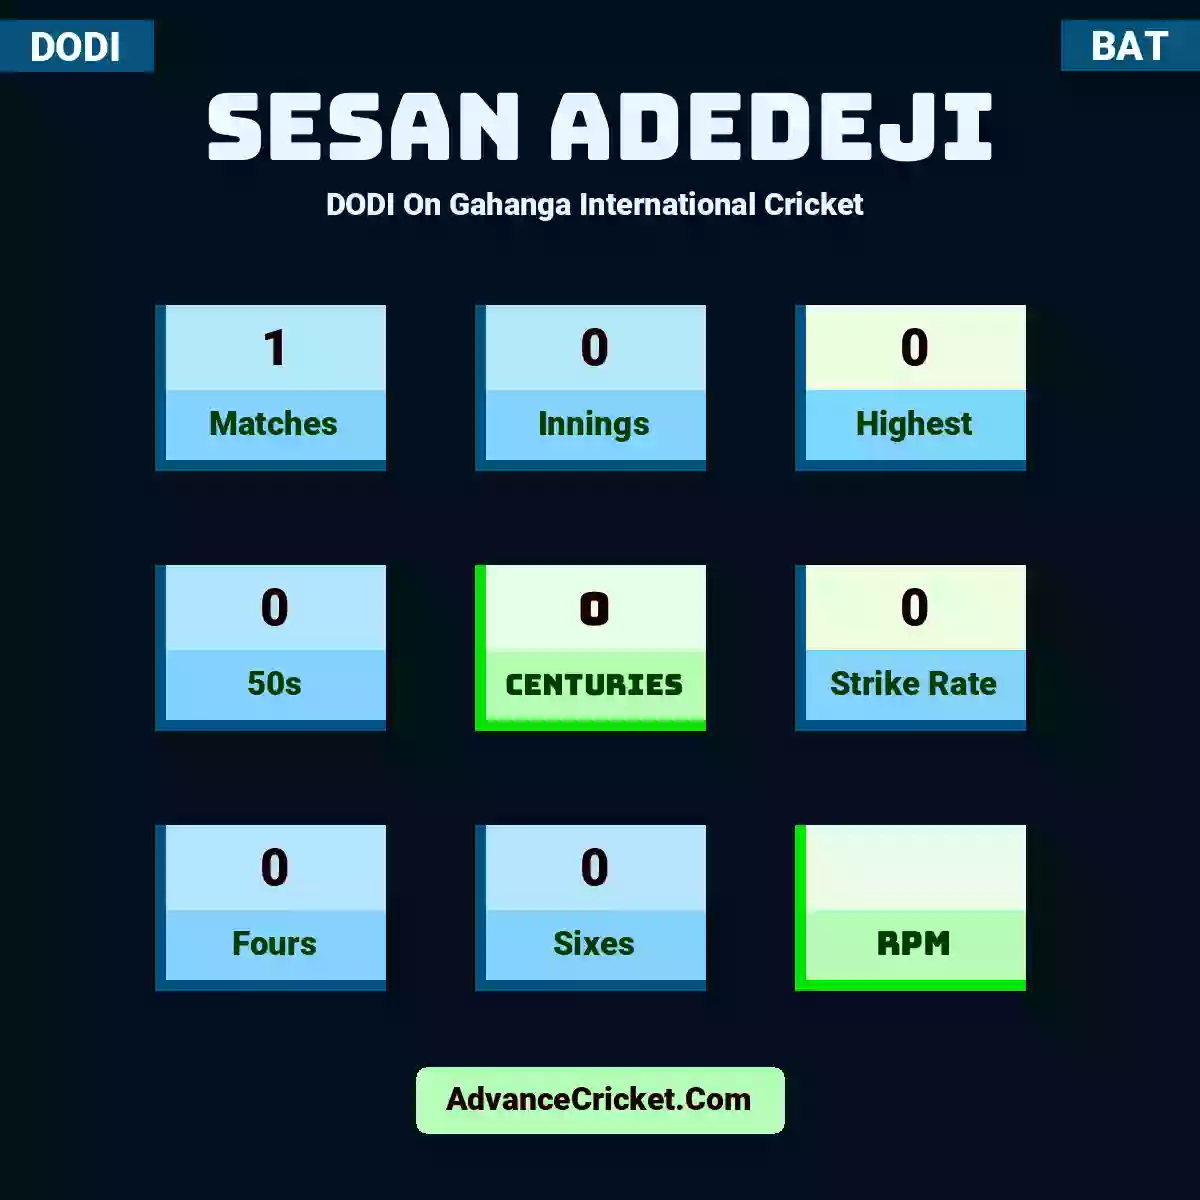 Sesan Adedeji DODI  On Gahanga International Cricket , Sesan Adedeji played 1 matches, scored 0 runs as highest, 0 half-centuries, and 0 centuries, with a strike rate of 0. S.Adedeji hit 0 fours and 0 sixes.